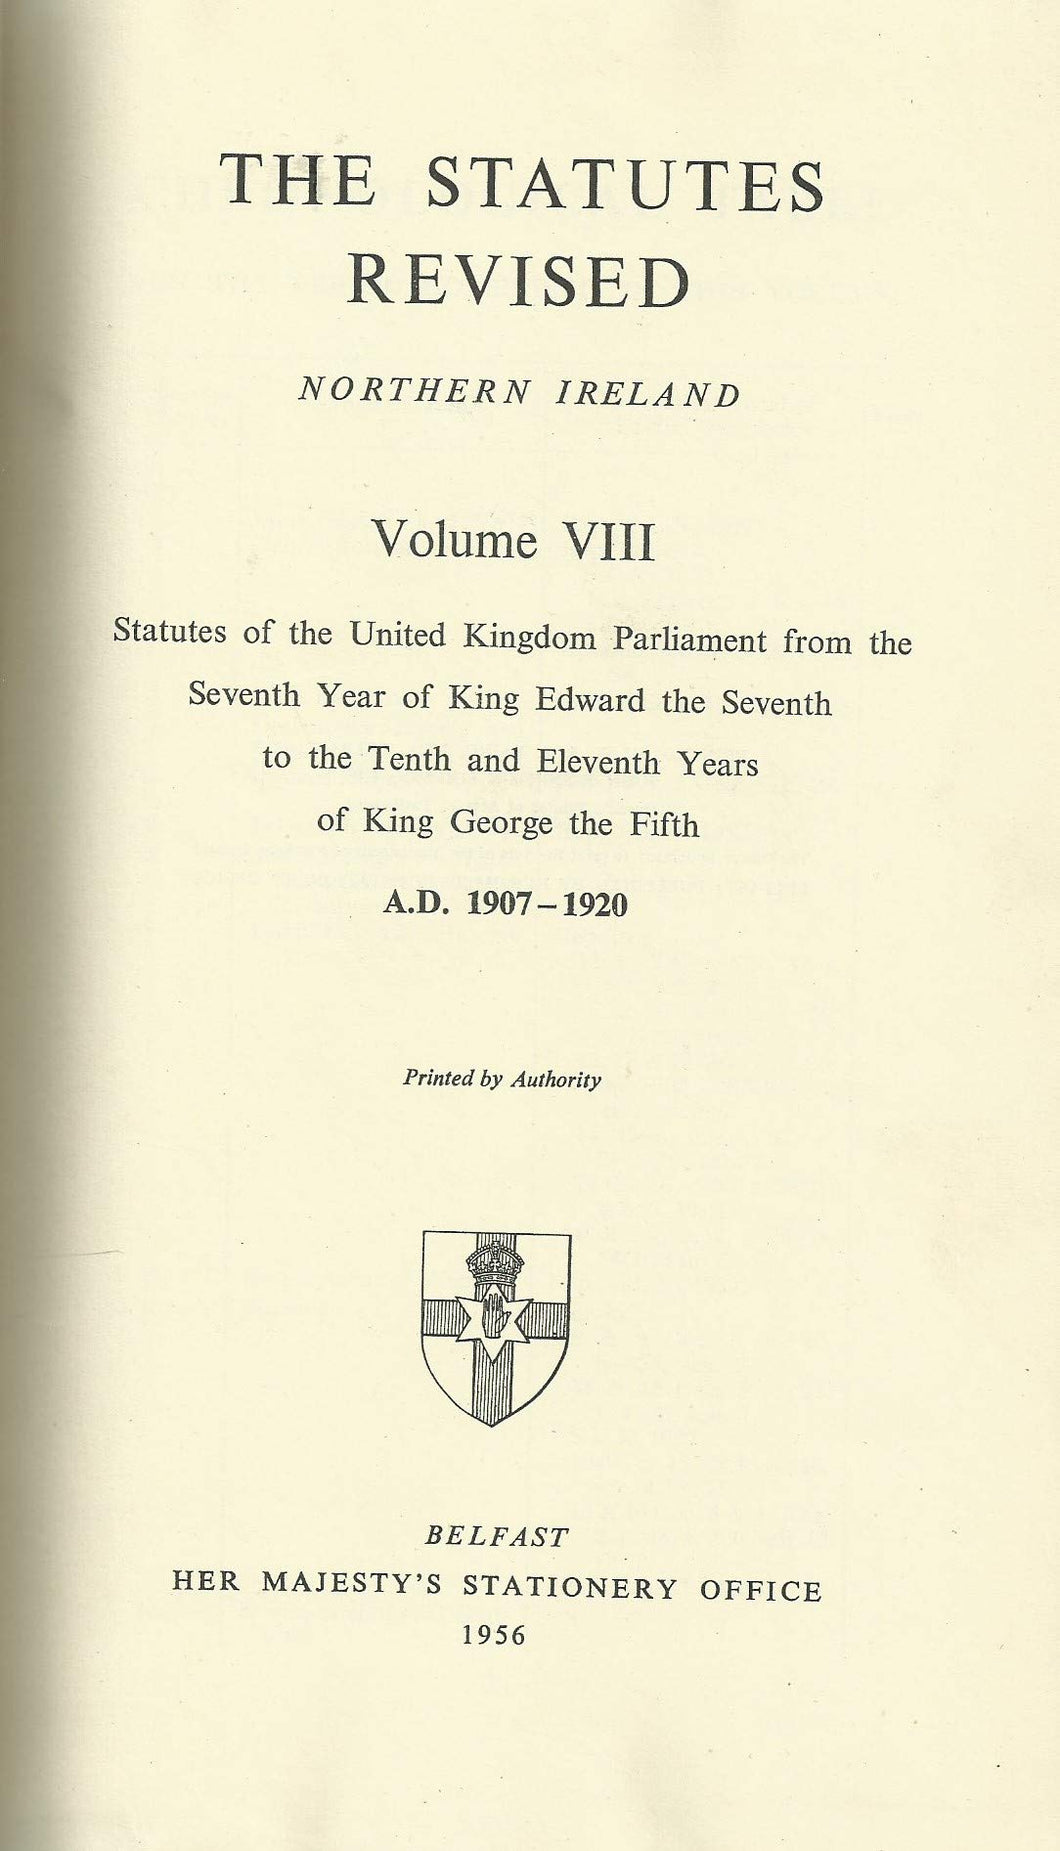 The Statutes Revised - Northern Ireland, Volume VIII - 1907-1920